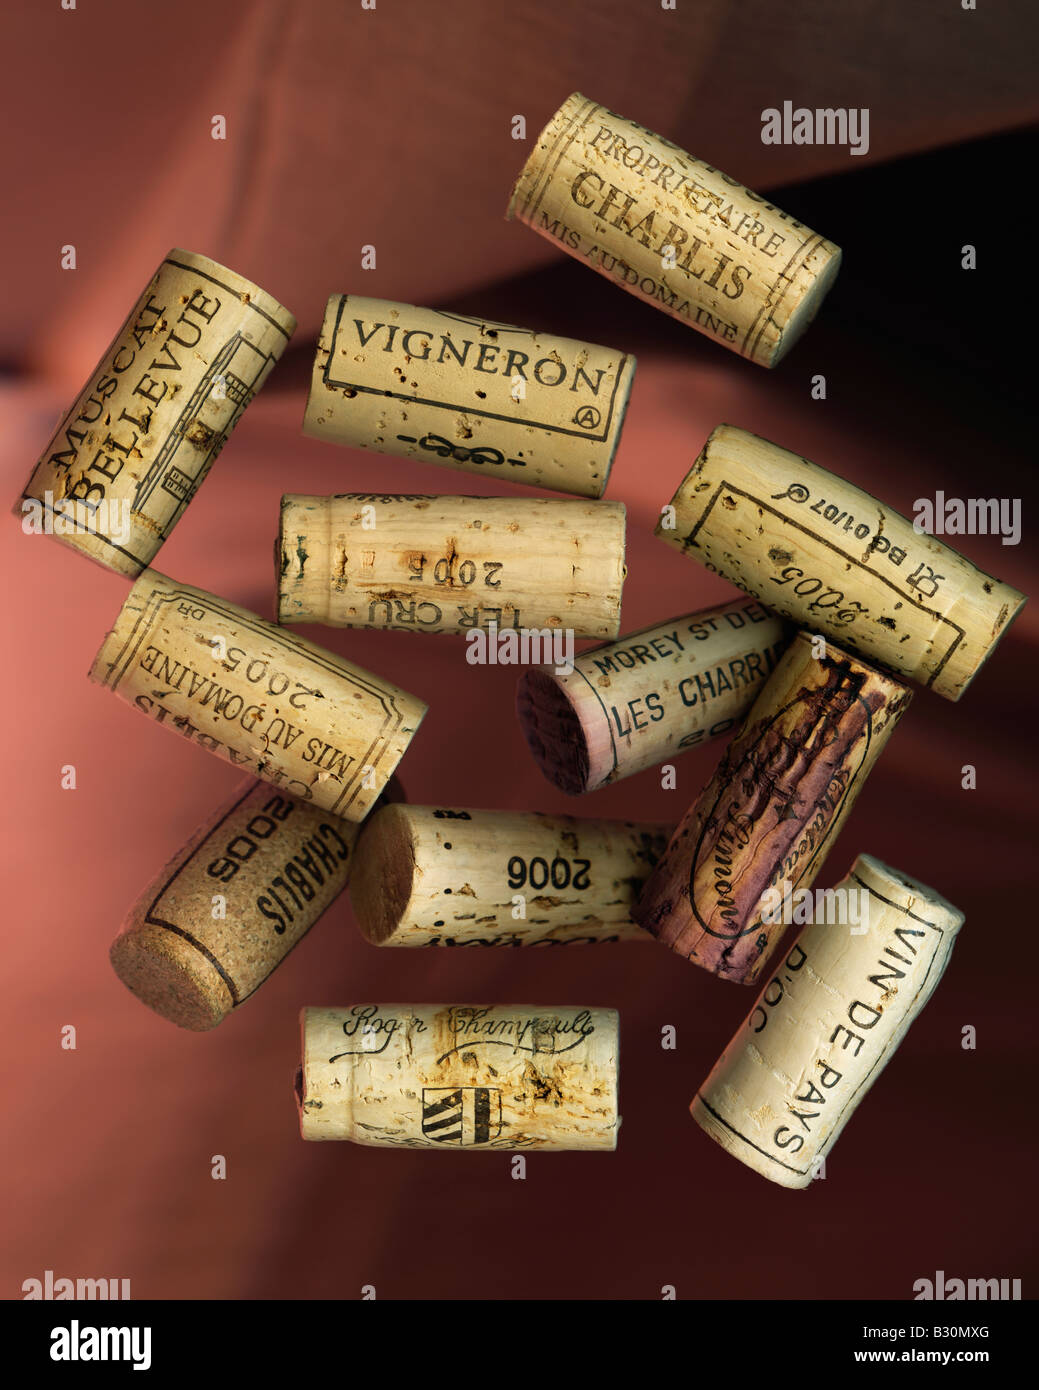 selection of Fine wine corks Stock Photo